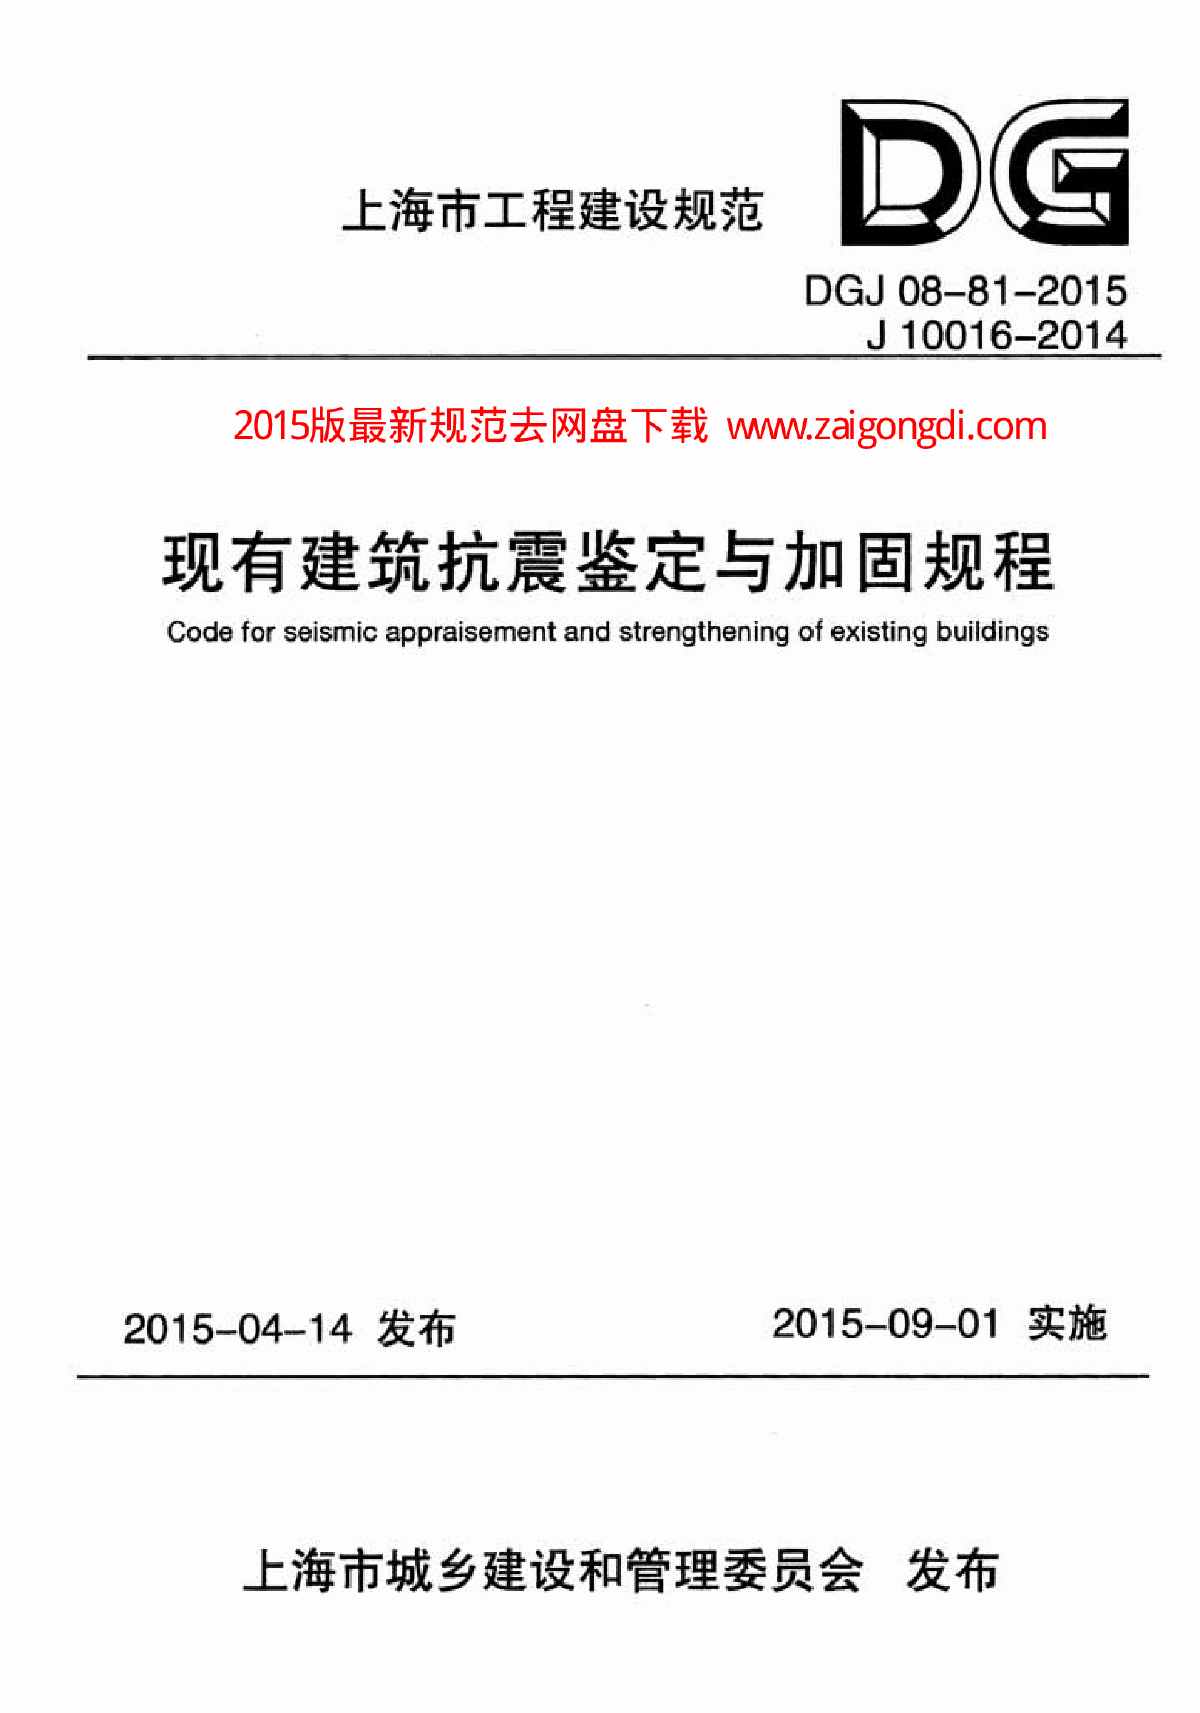 DGJ 08-81-2015 现有建筑抗震鉴定与加固规程